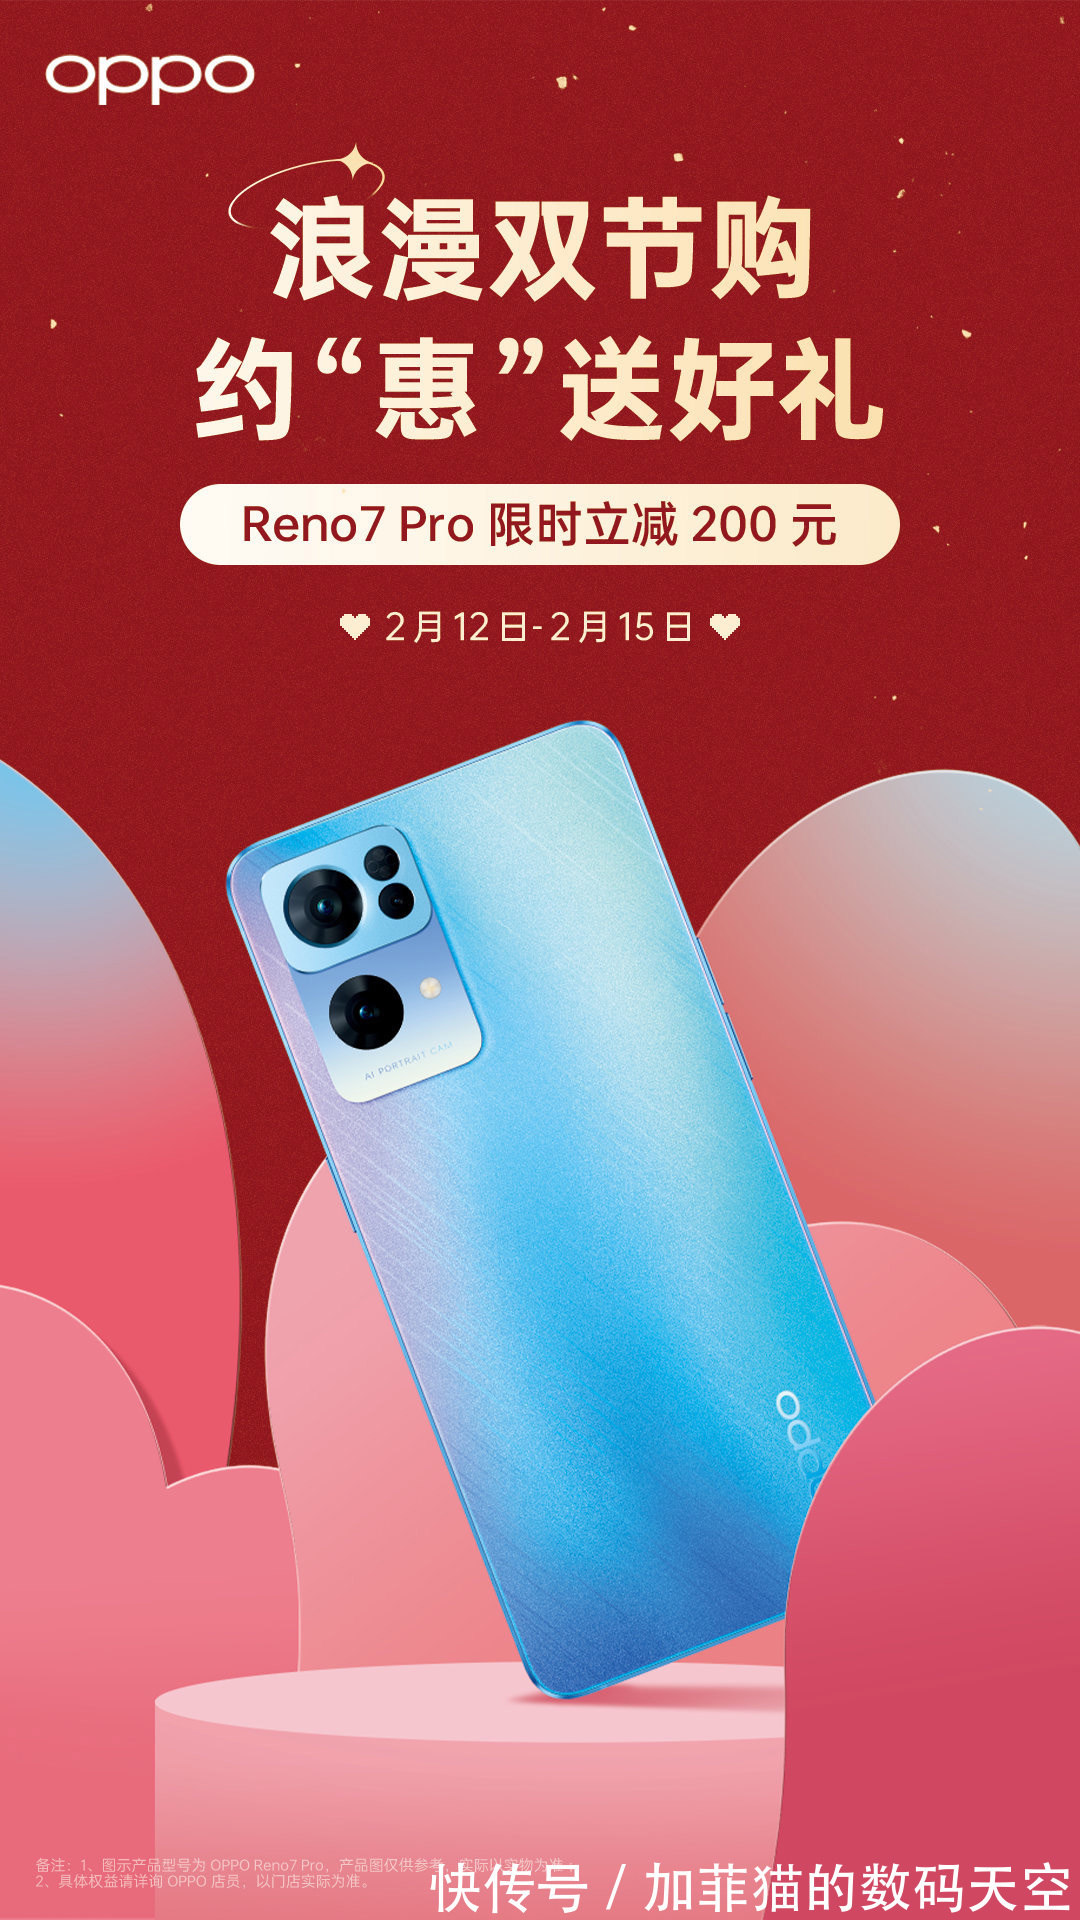 Reno7|最适合做情人节礼物的手机？高颜值+强影像，Reno7 Pro成首选